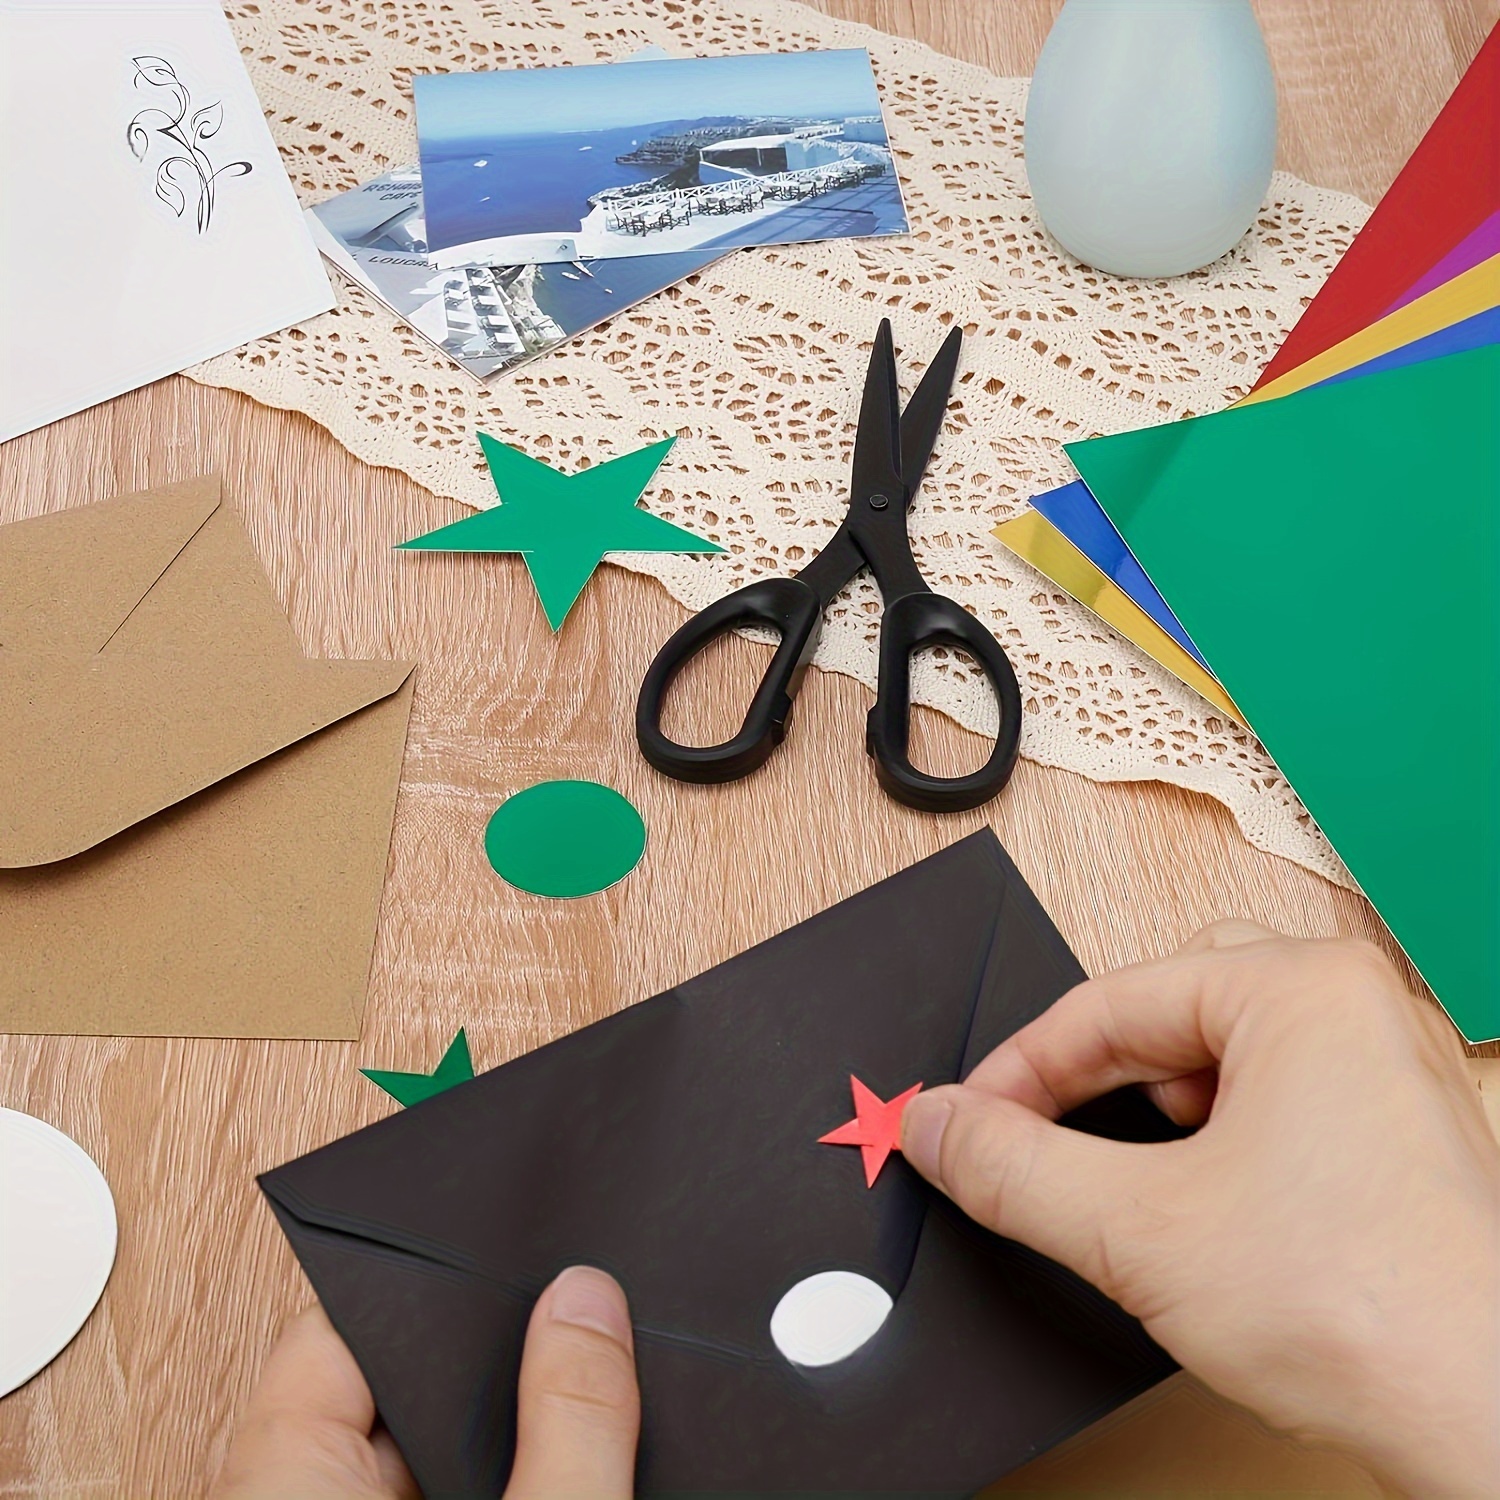 100Pcs 250gsm Glitter Cardstock Paper-Glitter Craft Paper A4 Thick